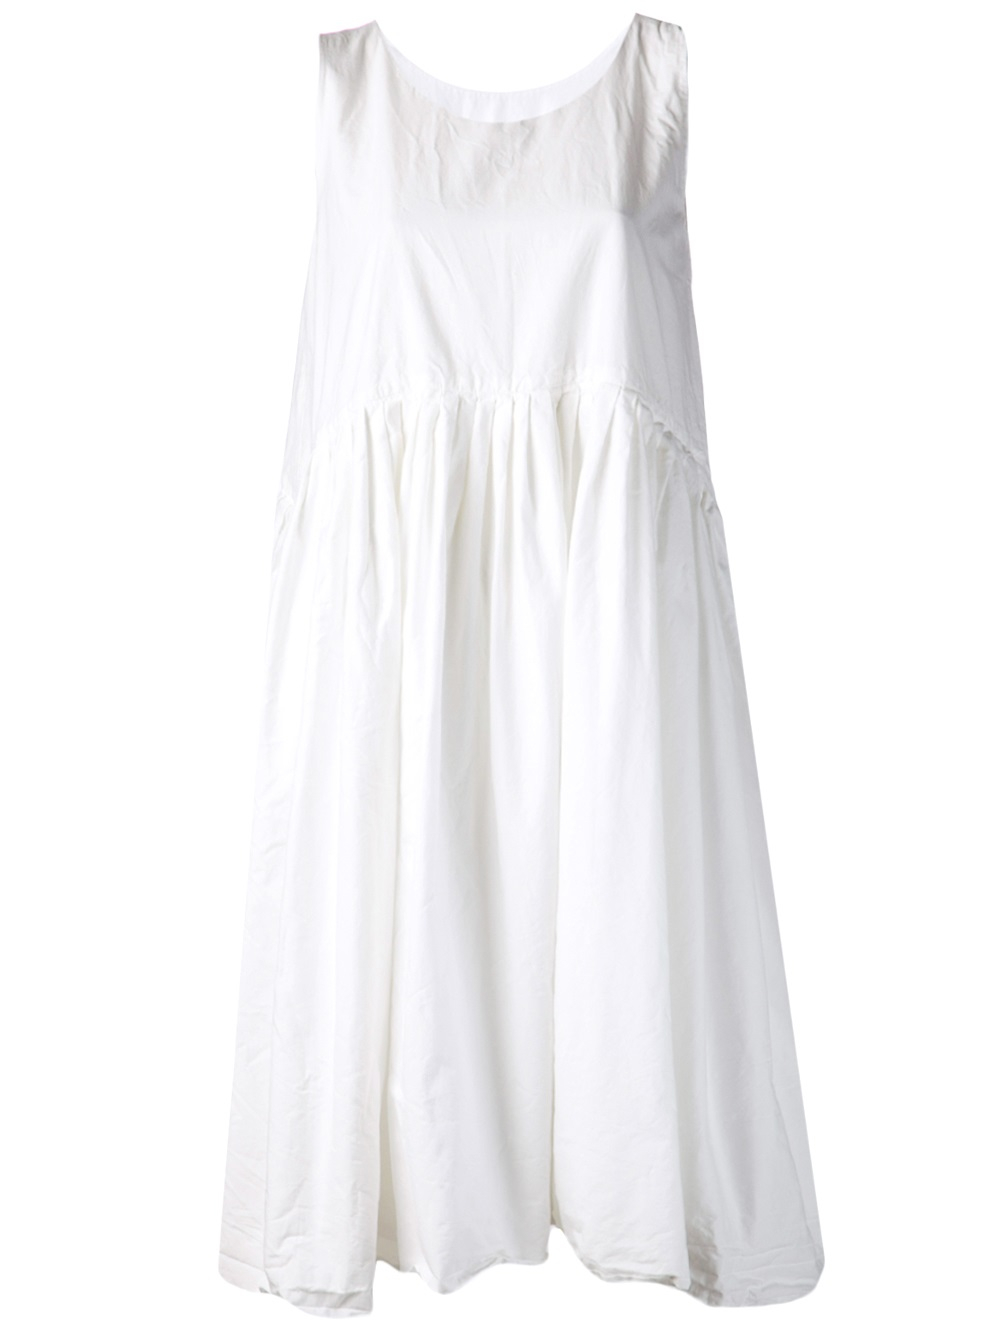 Lyst - Daniela Gregis Pleated Babydoll Dress in White